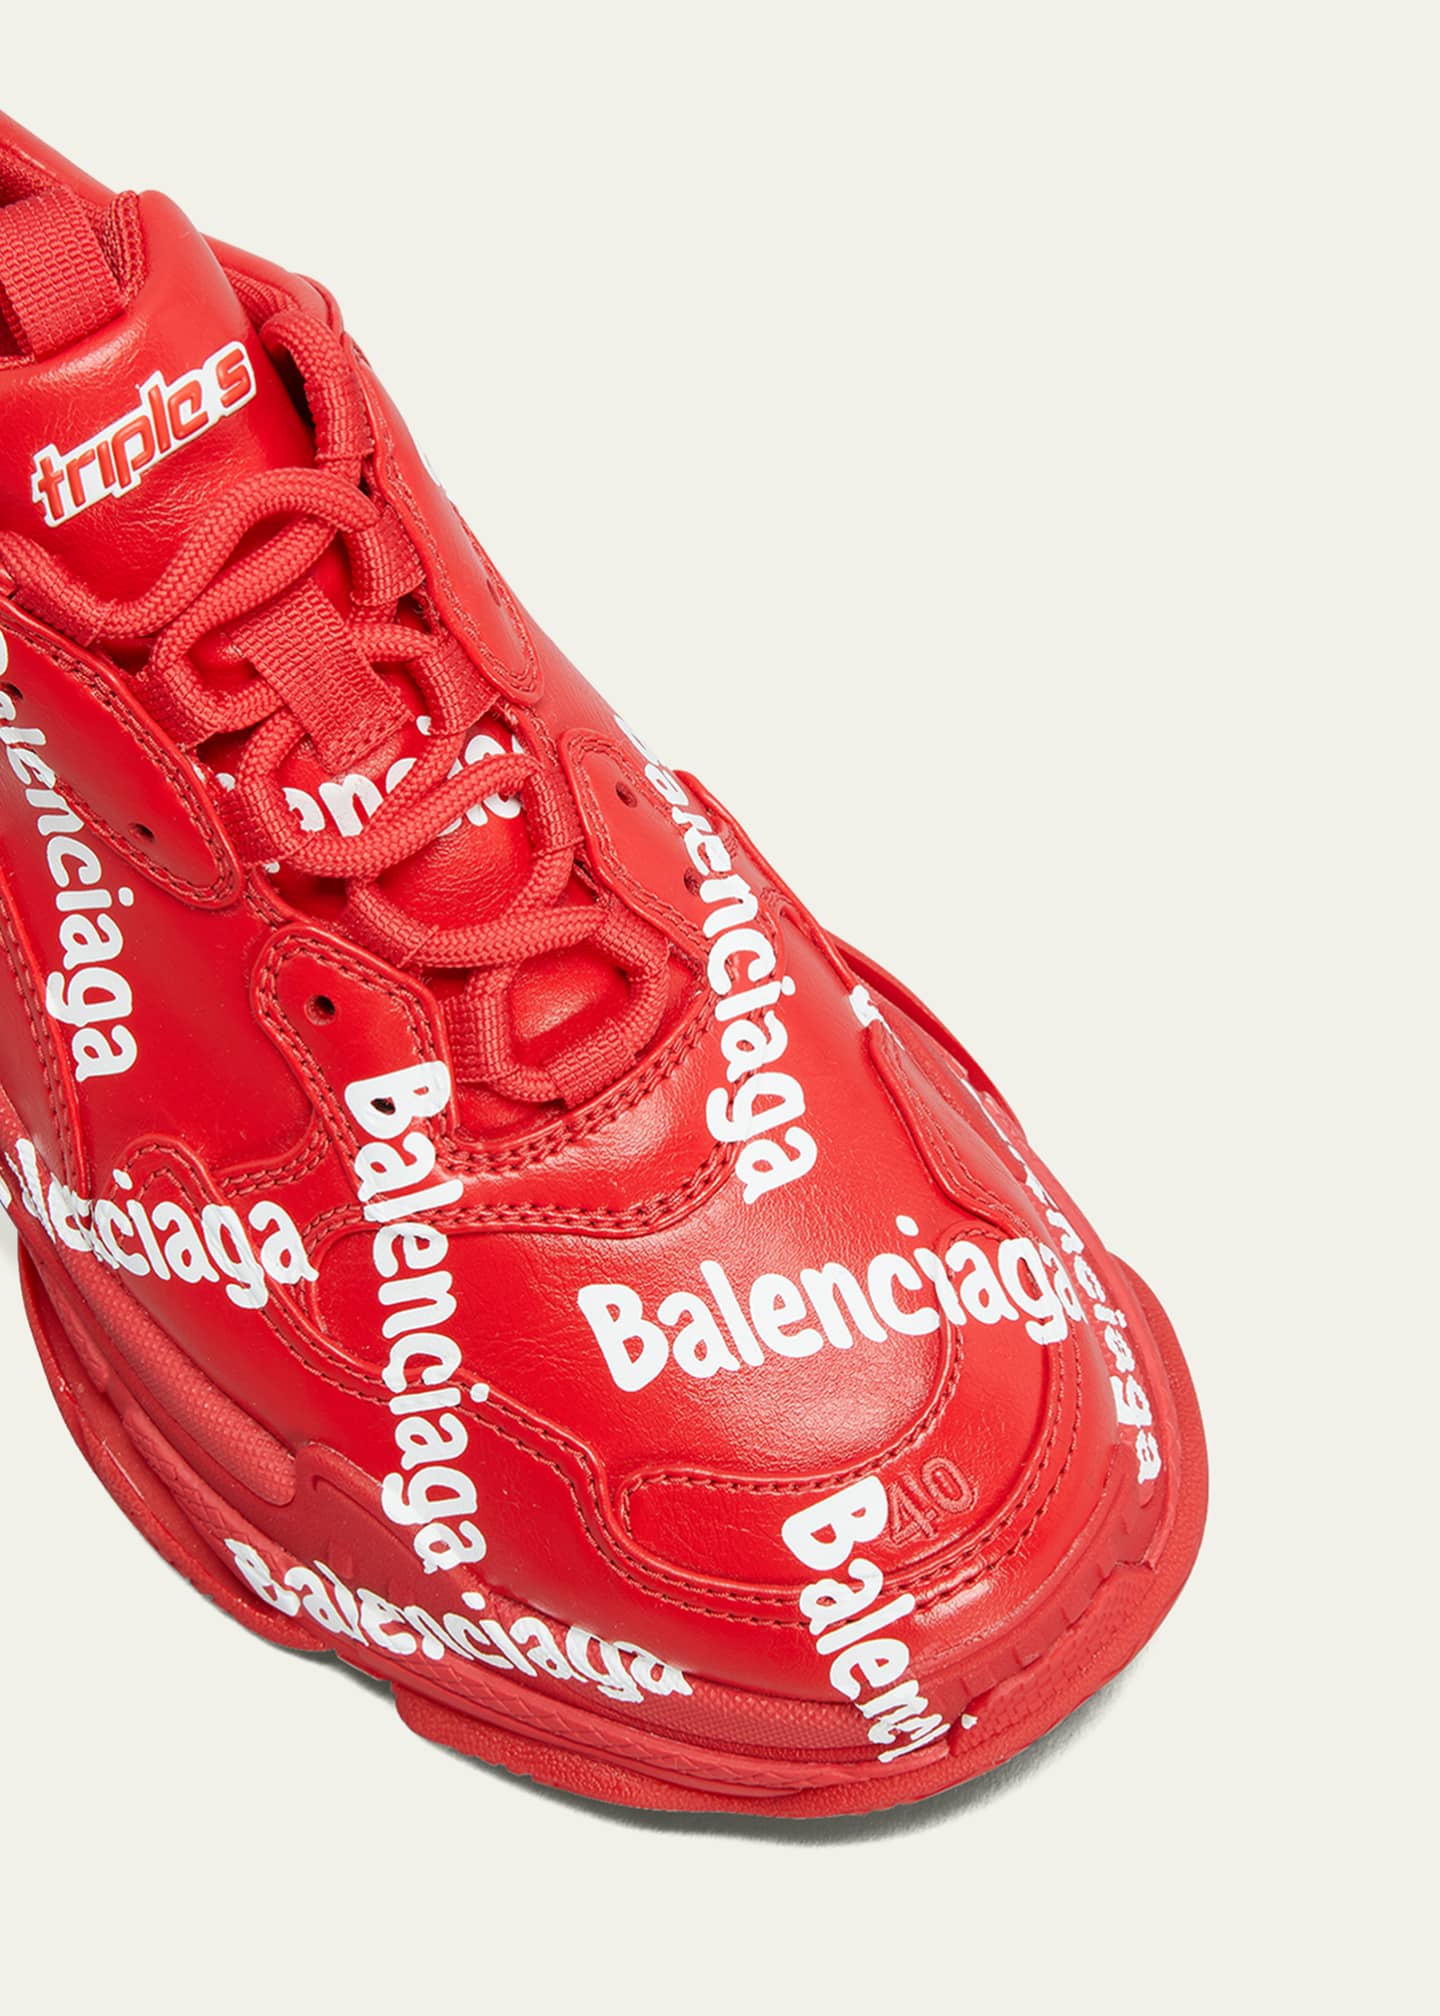 Balenciaga Triple S Men's Allover Sneakers Size 42 EU / 9 US Red White